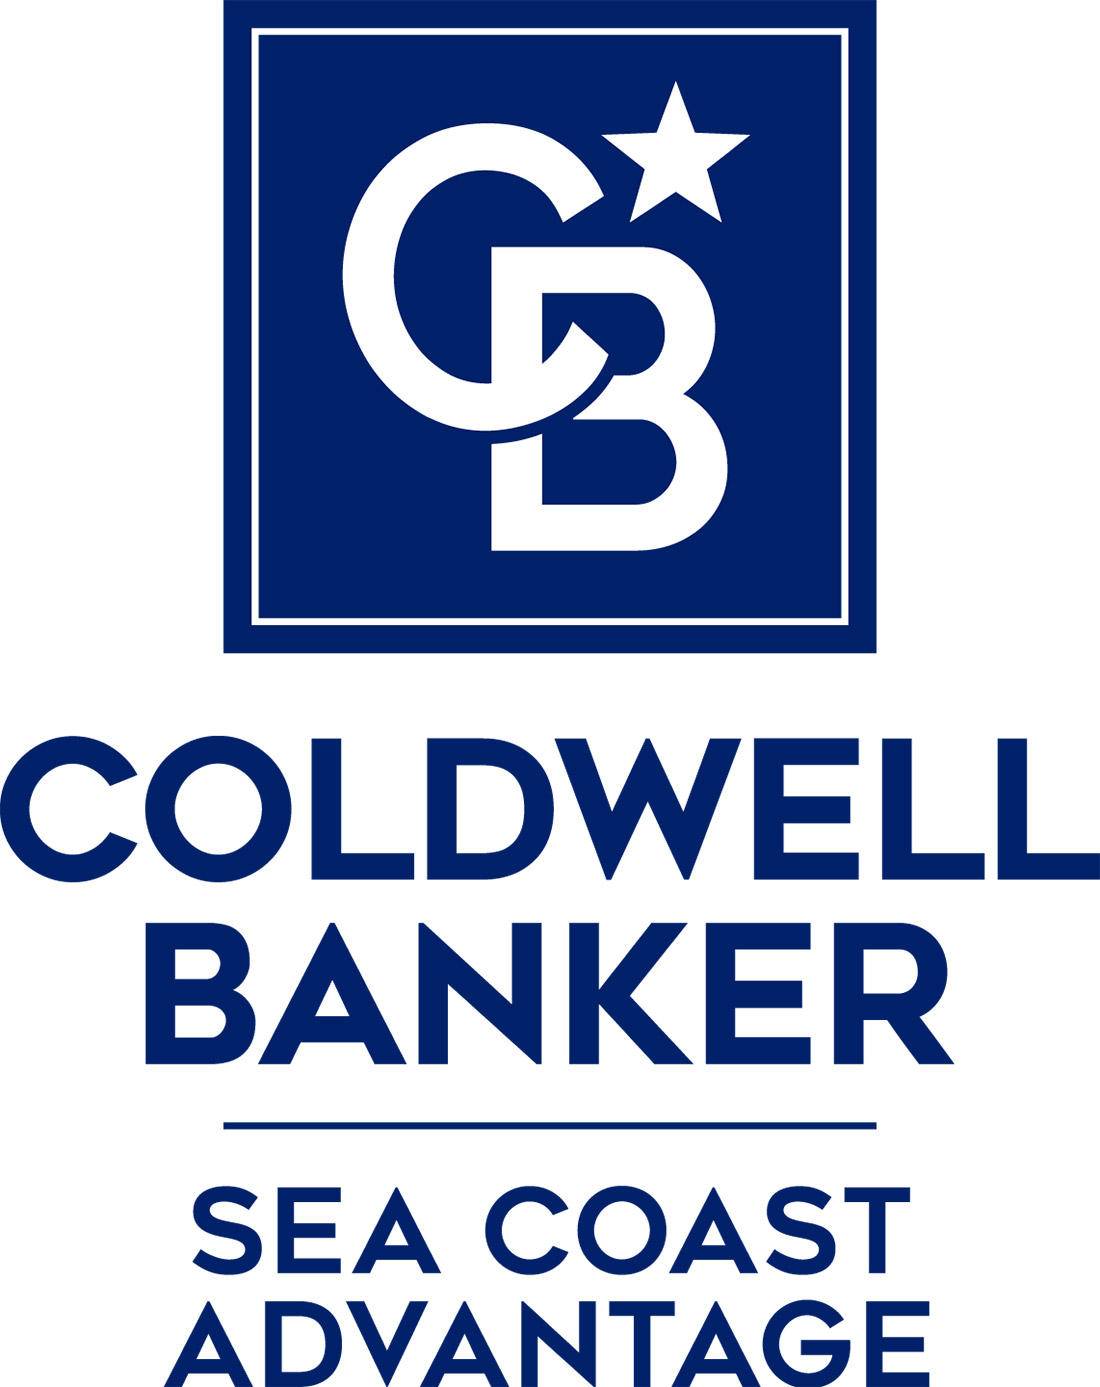 Coldwell Banker Sea Coast Advantage - Enzor & Associates Logo